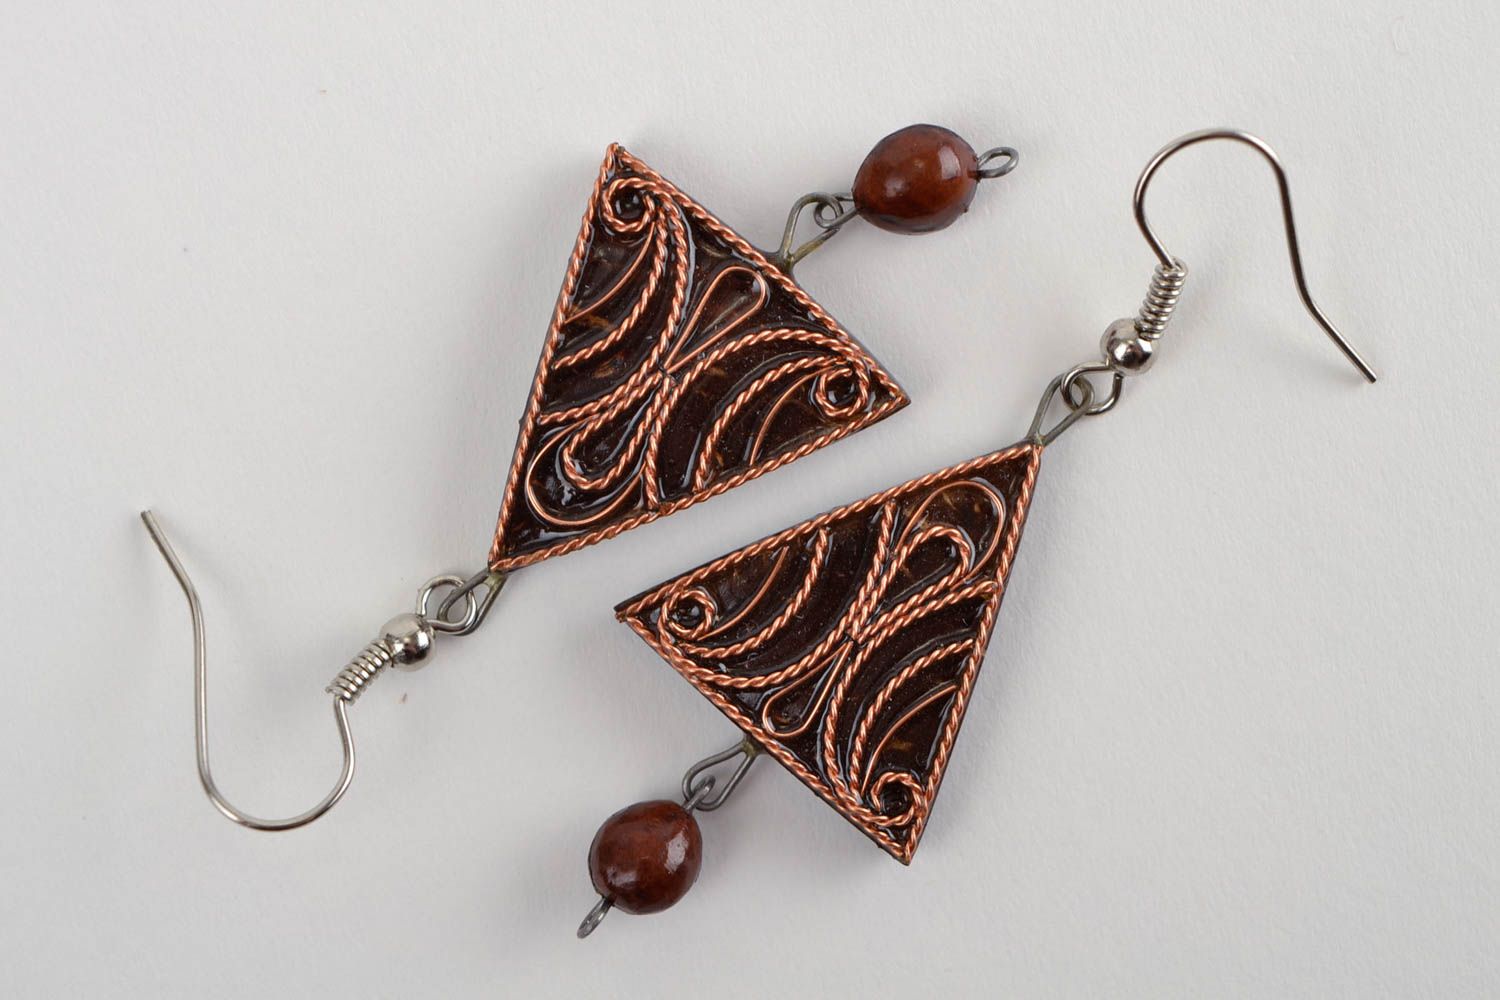 Handmade earrings wood earrings homemade jewelry dangling earrings gifts for her photo 2